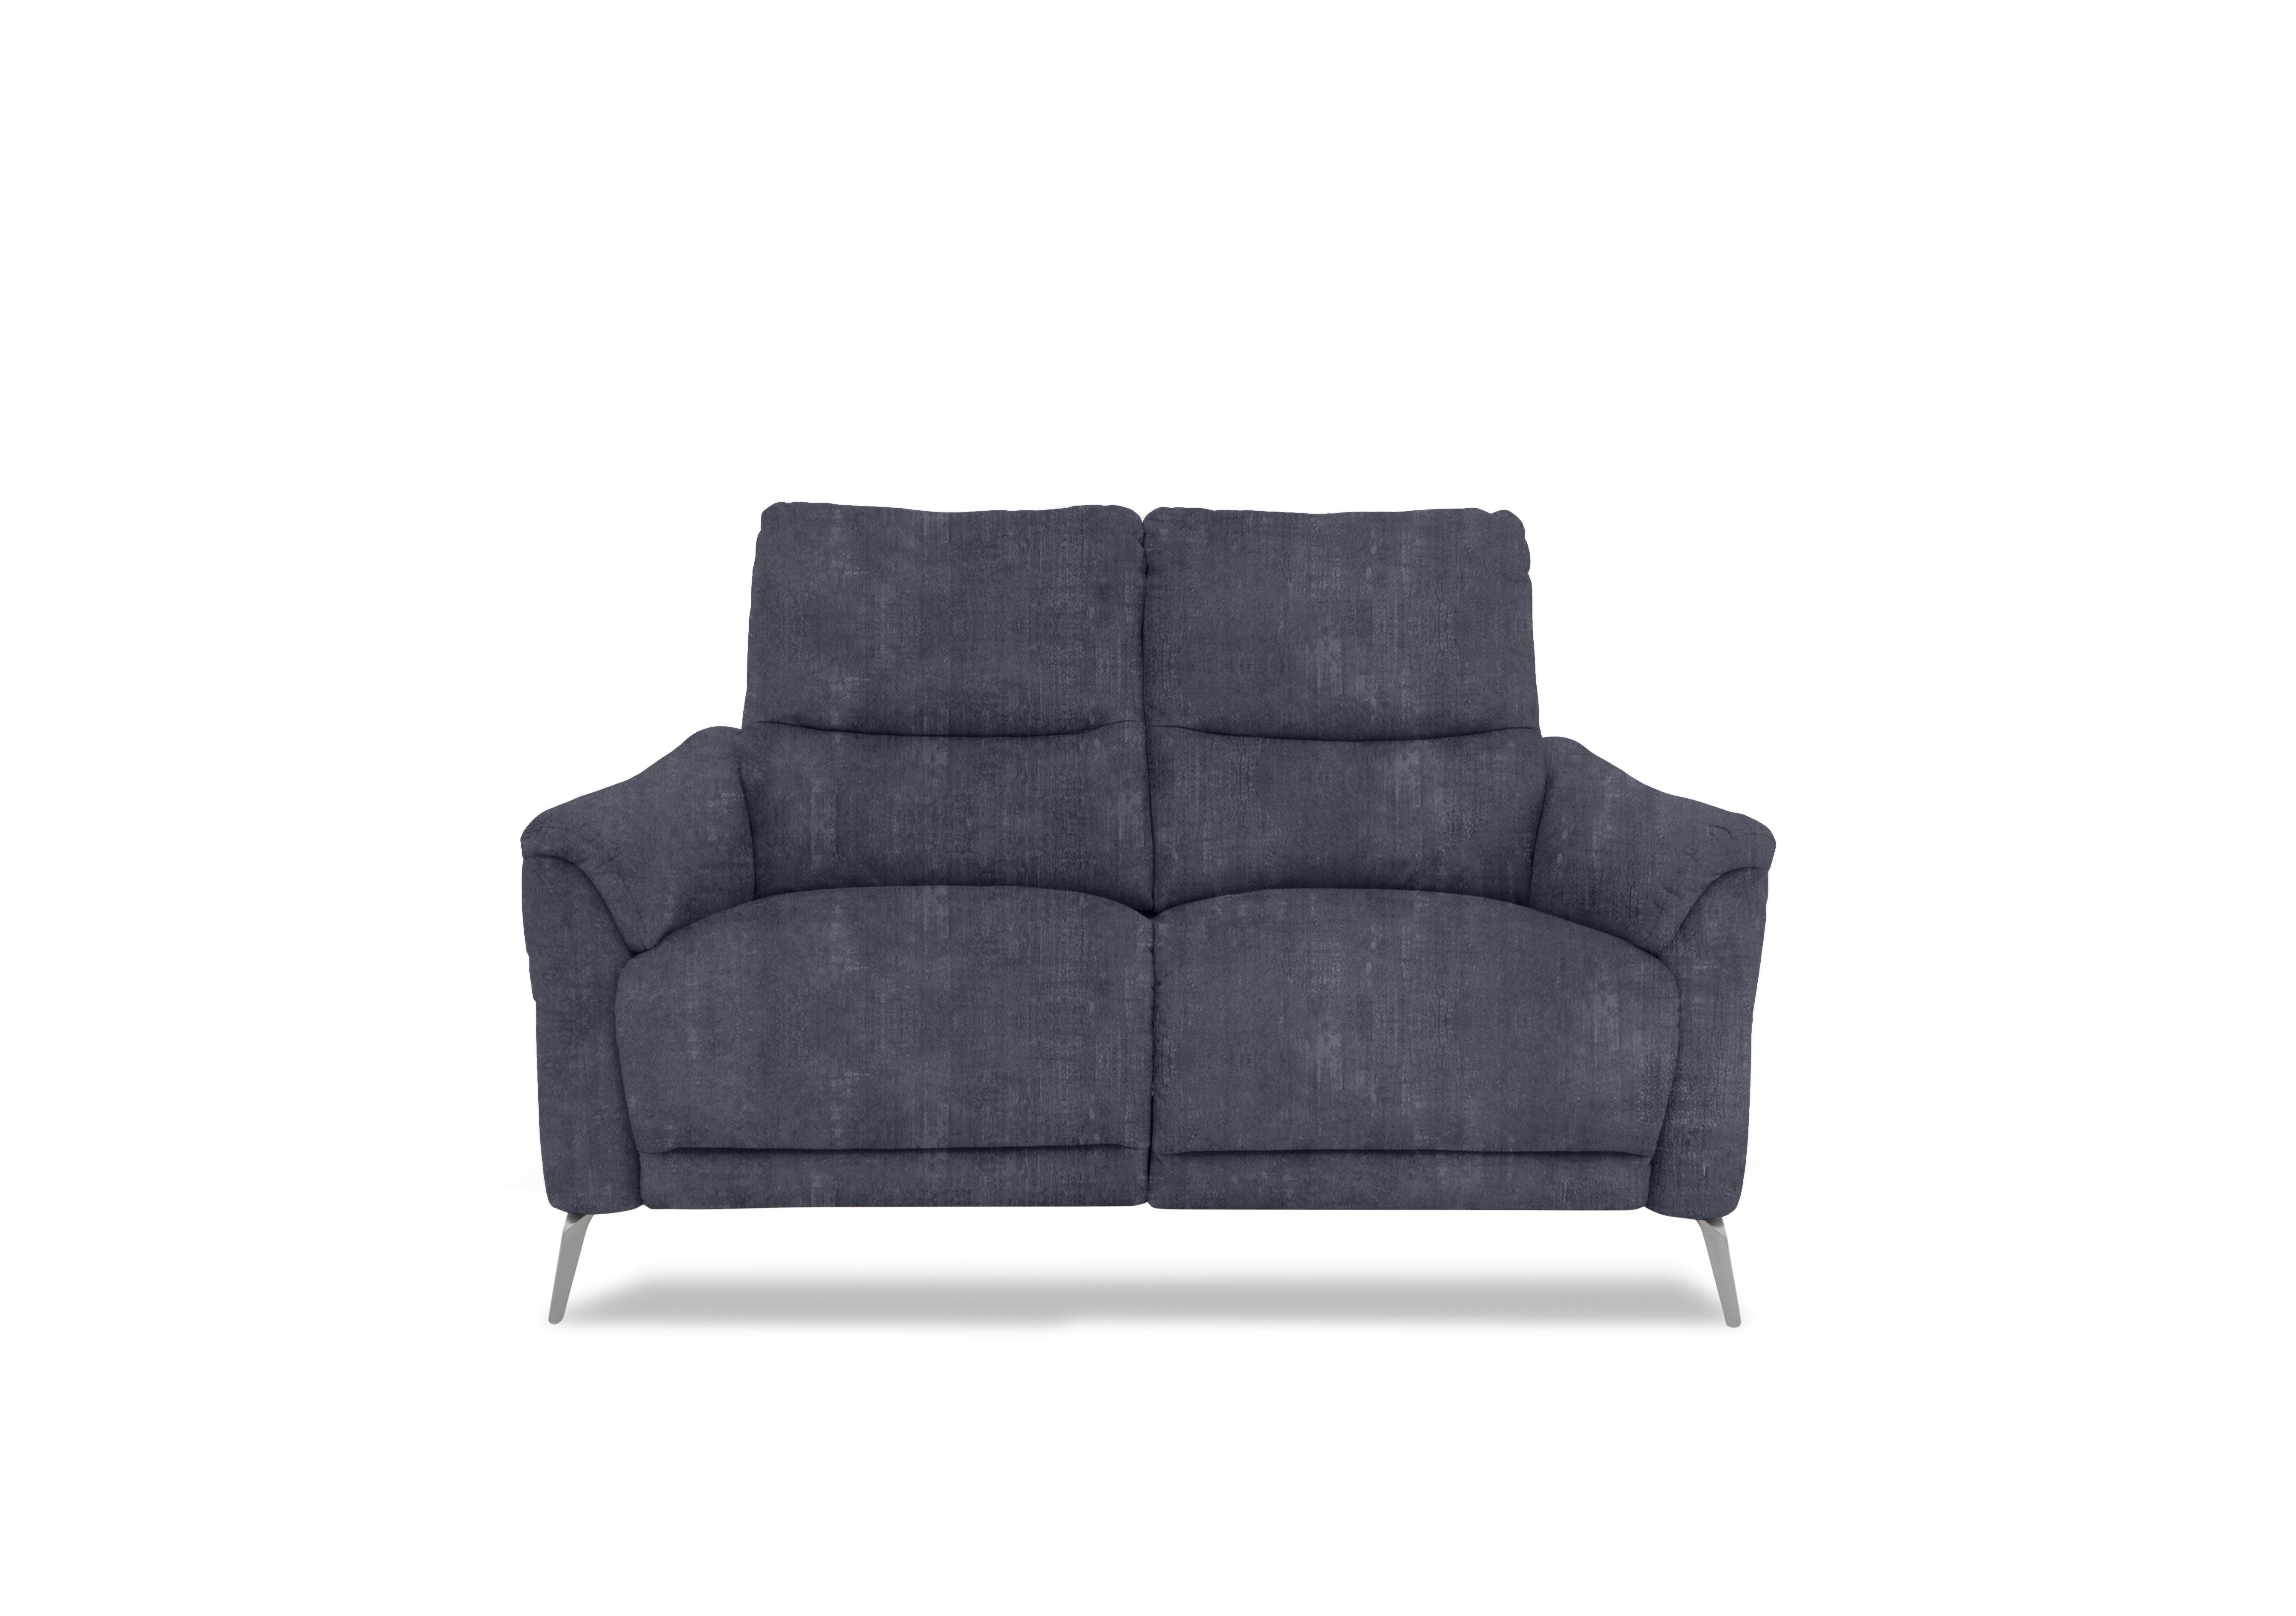 Daytona 2 Seater Fabric Sofa in 52001 Heritage Granite on Furniture Village